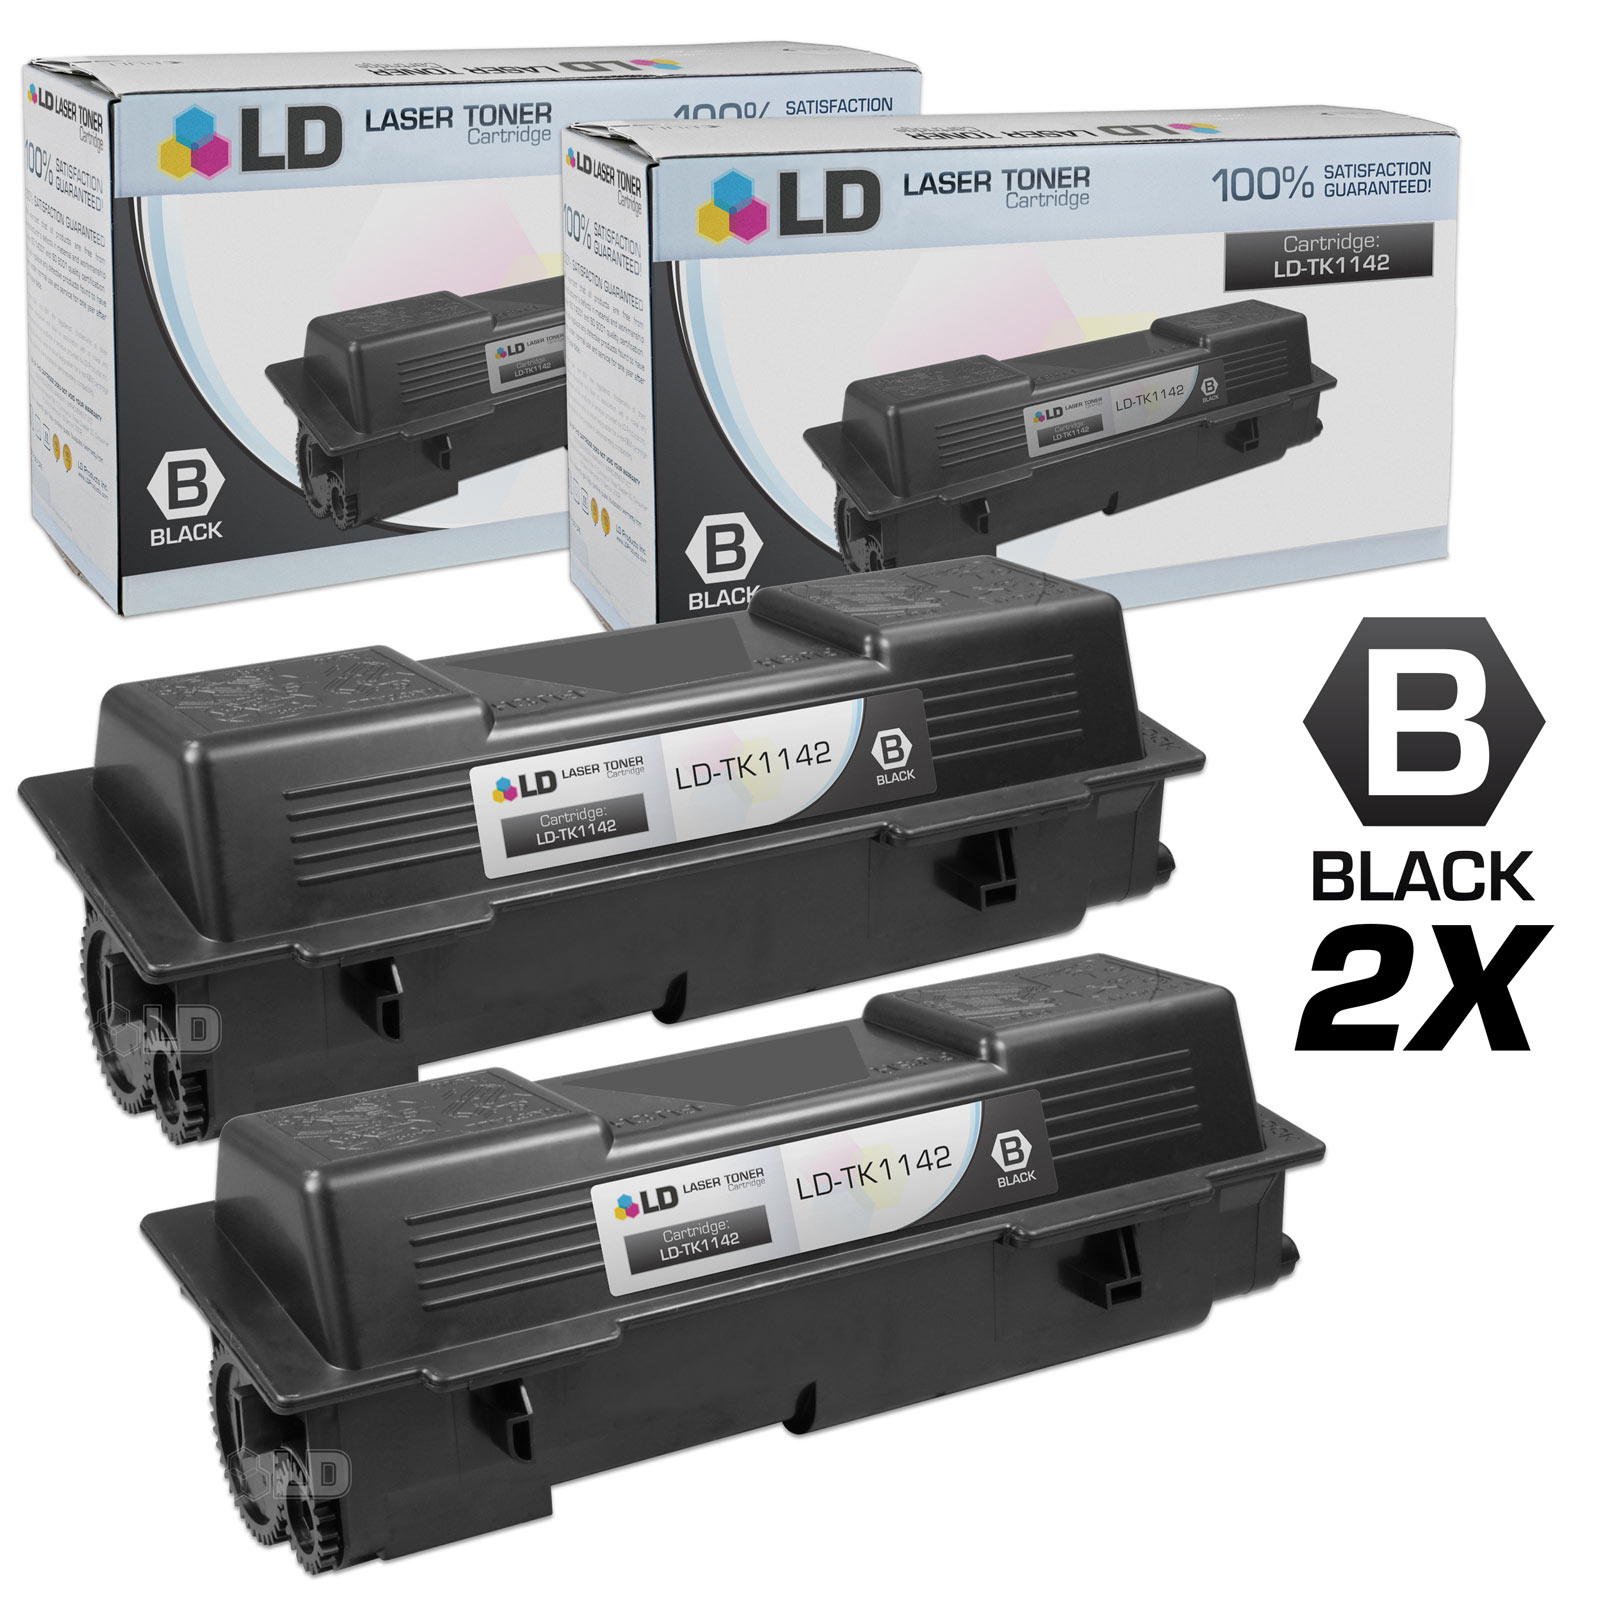 Compatible Replacements for Kyocera-Mita TK-1142 Set of 2 Black Laser Toner Cartridges - image 1 of 1